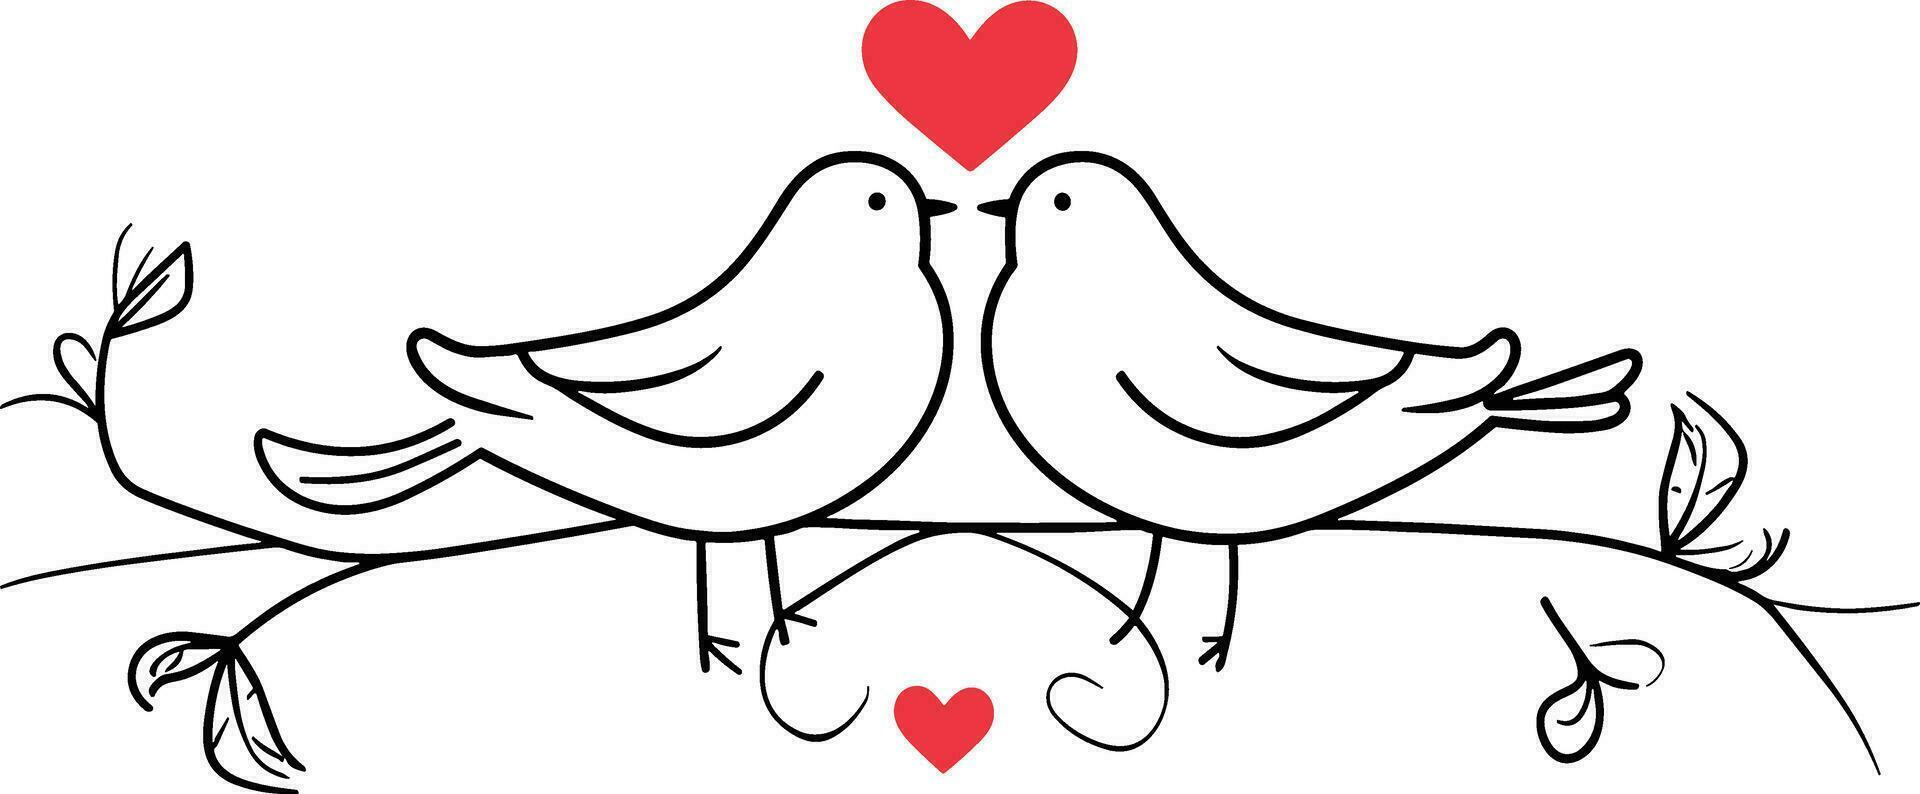 Pareja paloma de amar, vector de paloma línea Arte ilustración , San Valentín día concepto, romántico símbolo, amor tema, decorativo, romántico aves, San Valentín decoración, Pareja aves